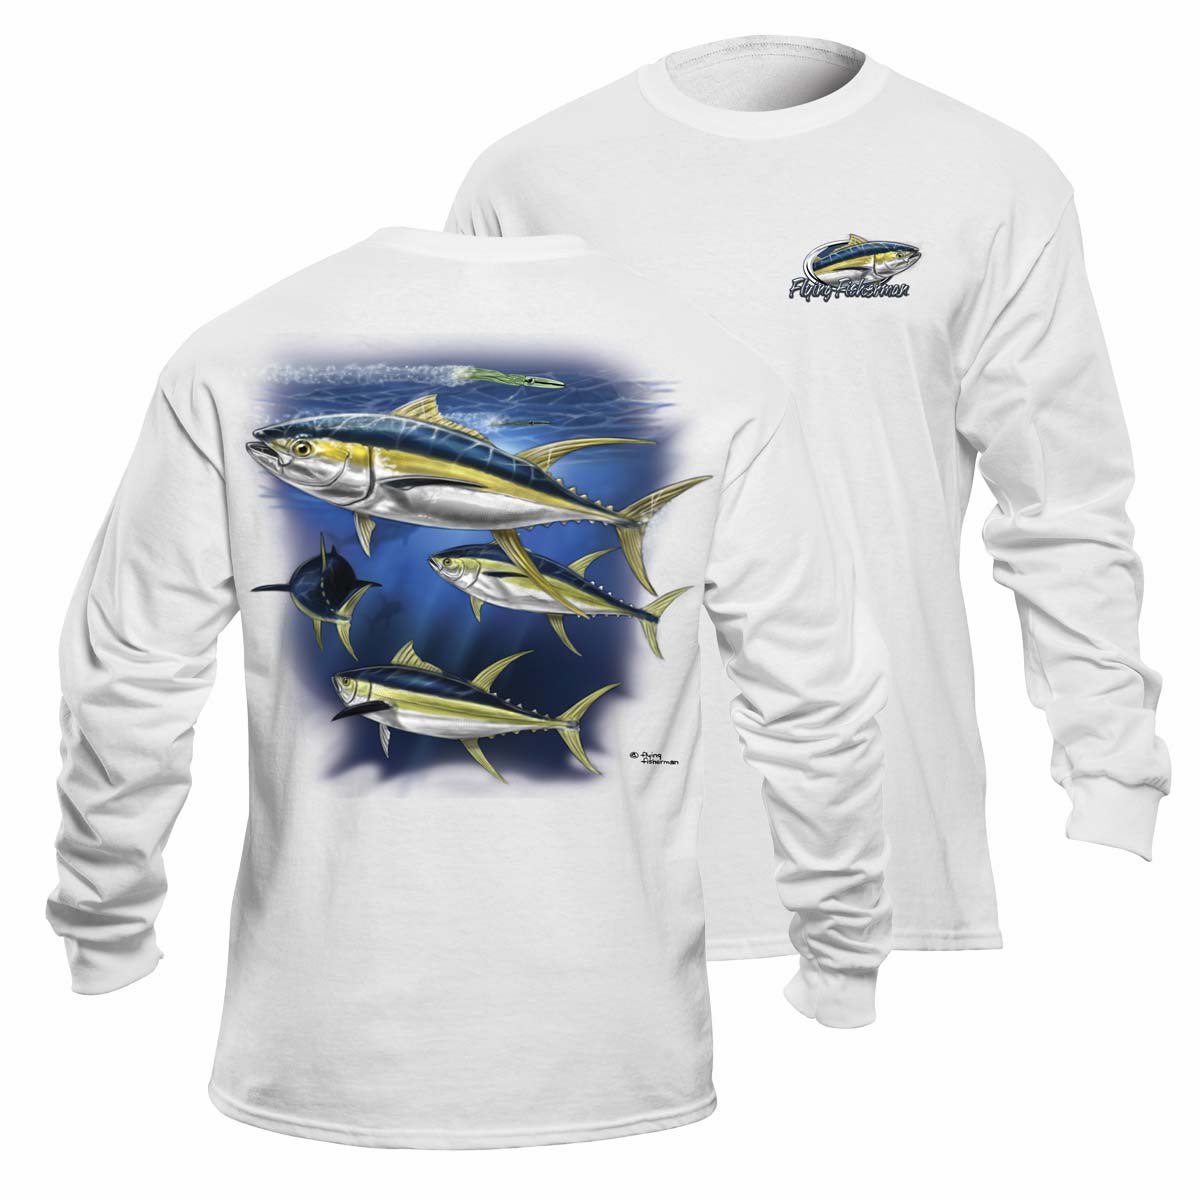 Flying Fisherman Tl1632WXL Yellowfin Long Sleeved T-Shirt, White Xlarge